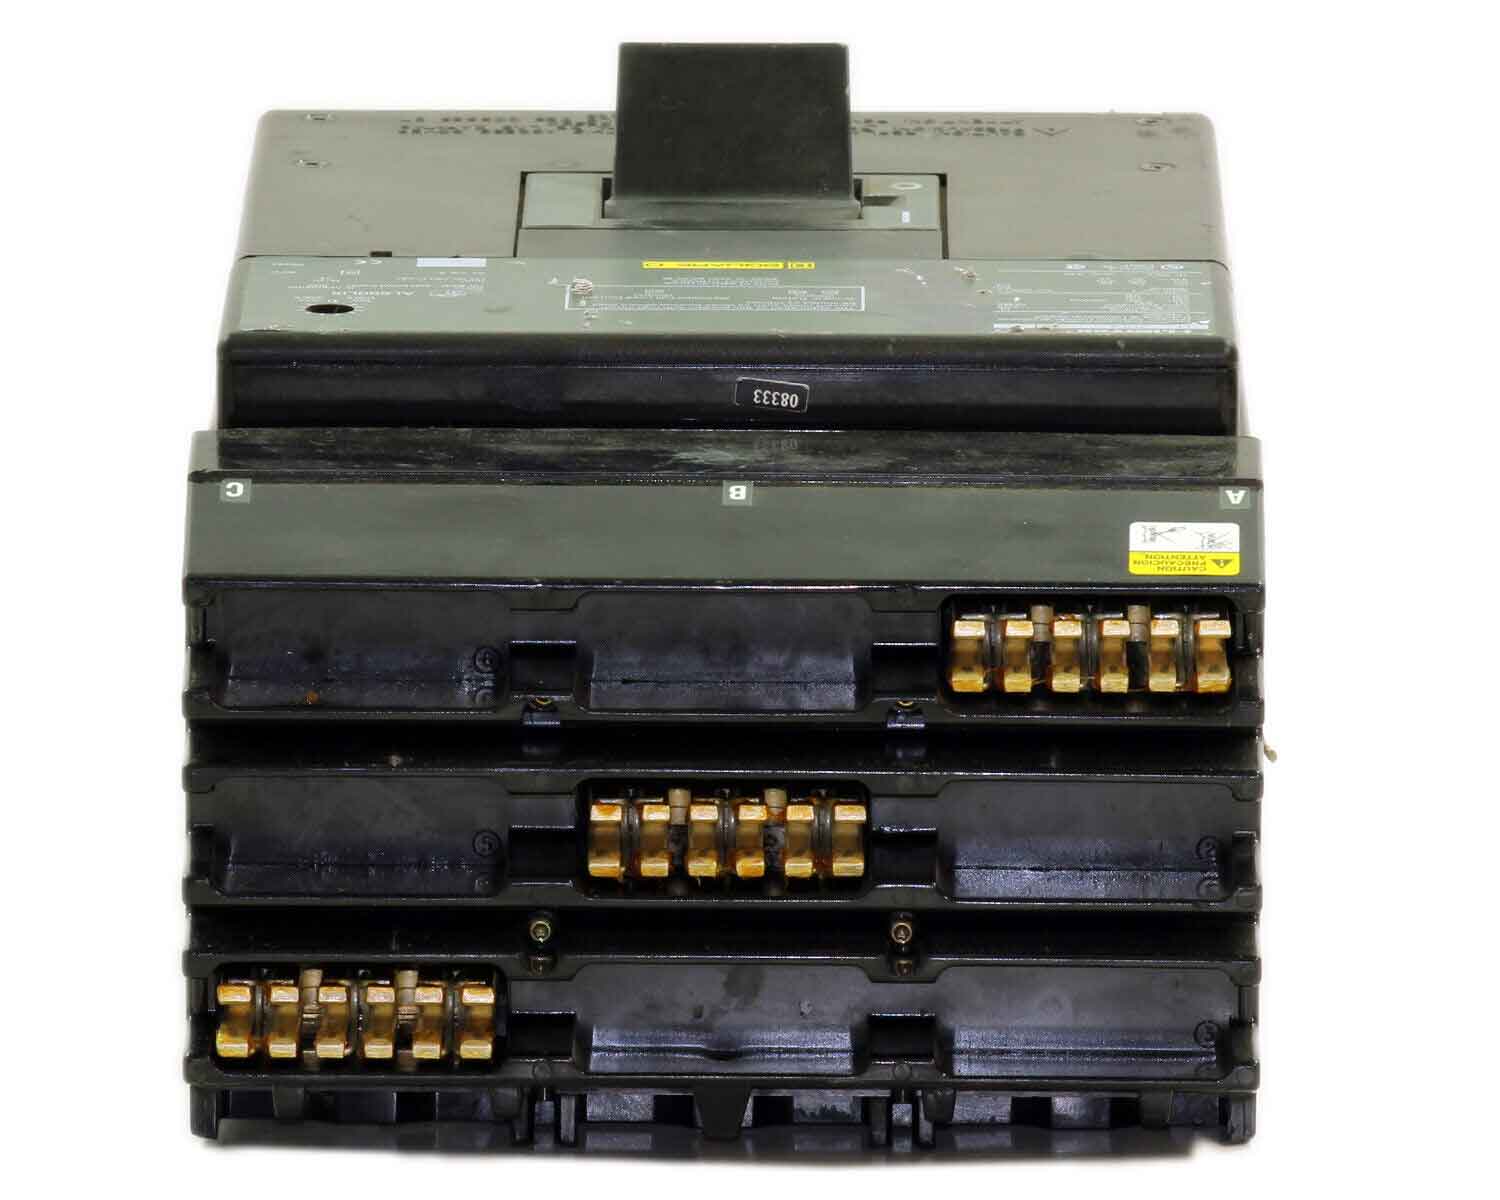 LI36450 - Square D - Molded Case Circuit Breakers